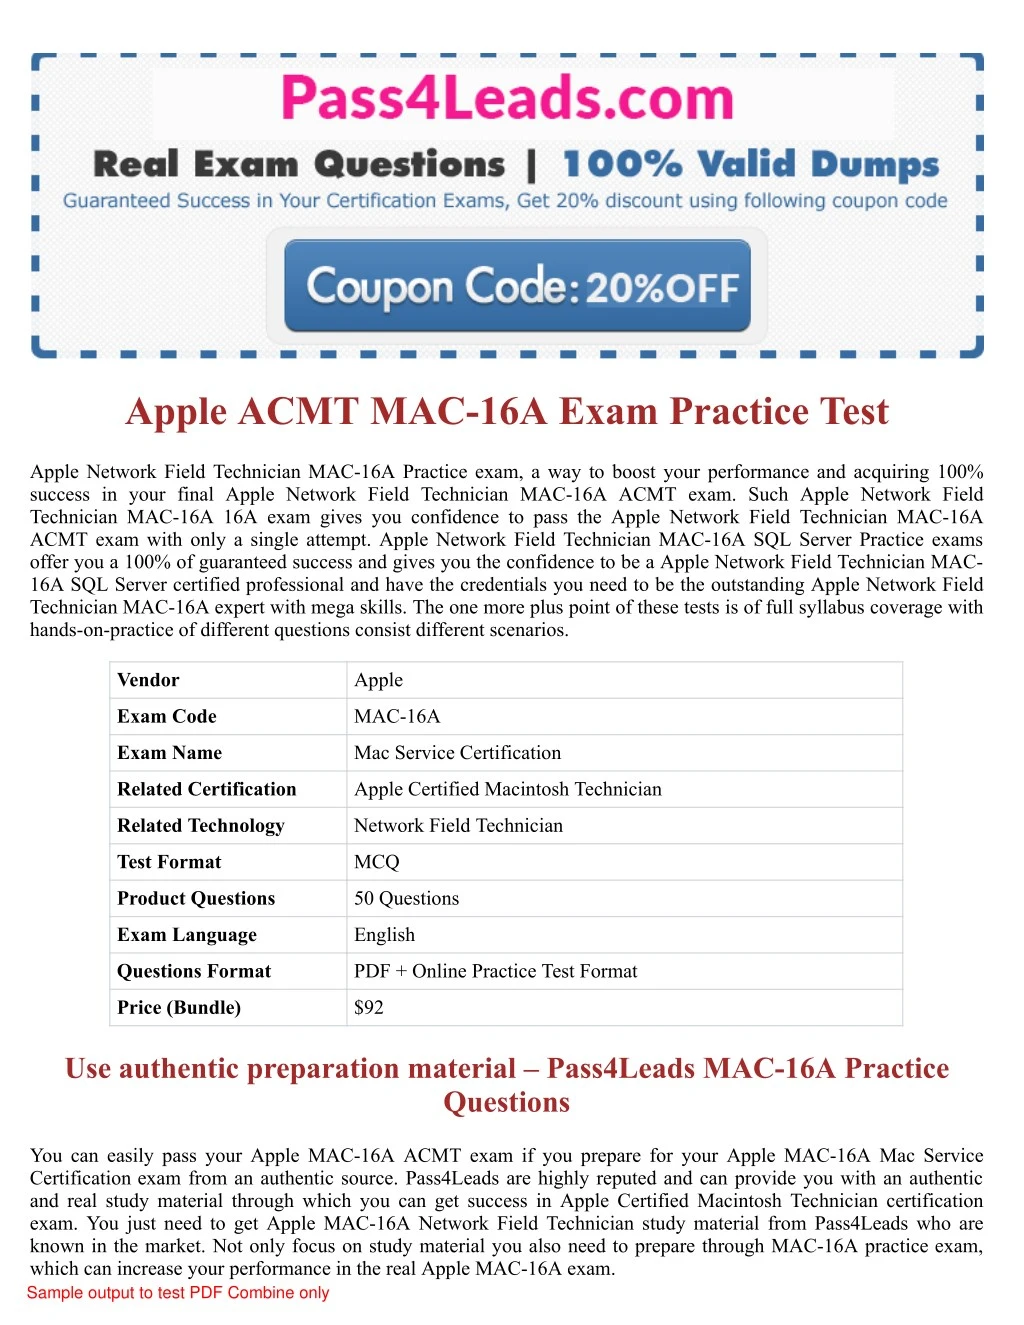 apple acmt mac 16a exam practice test